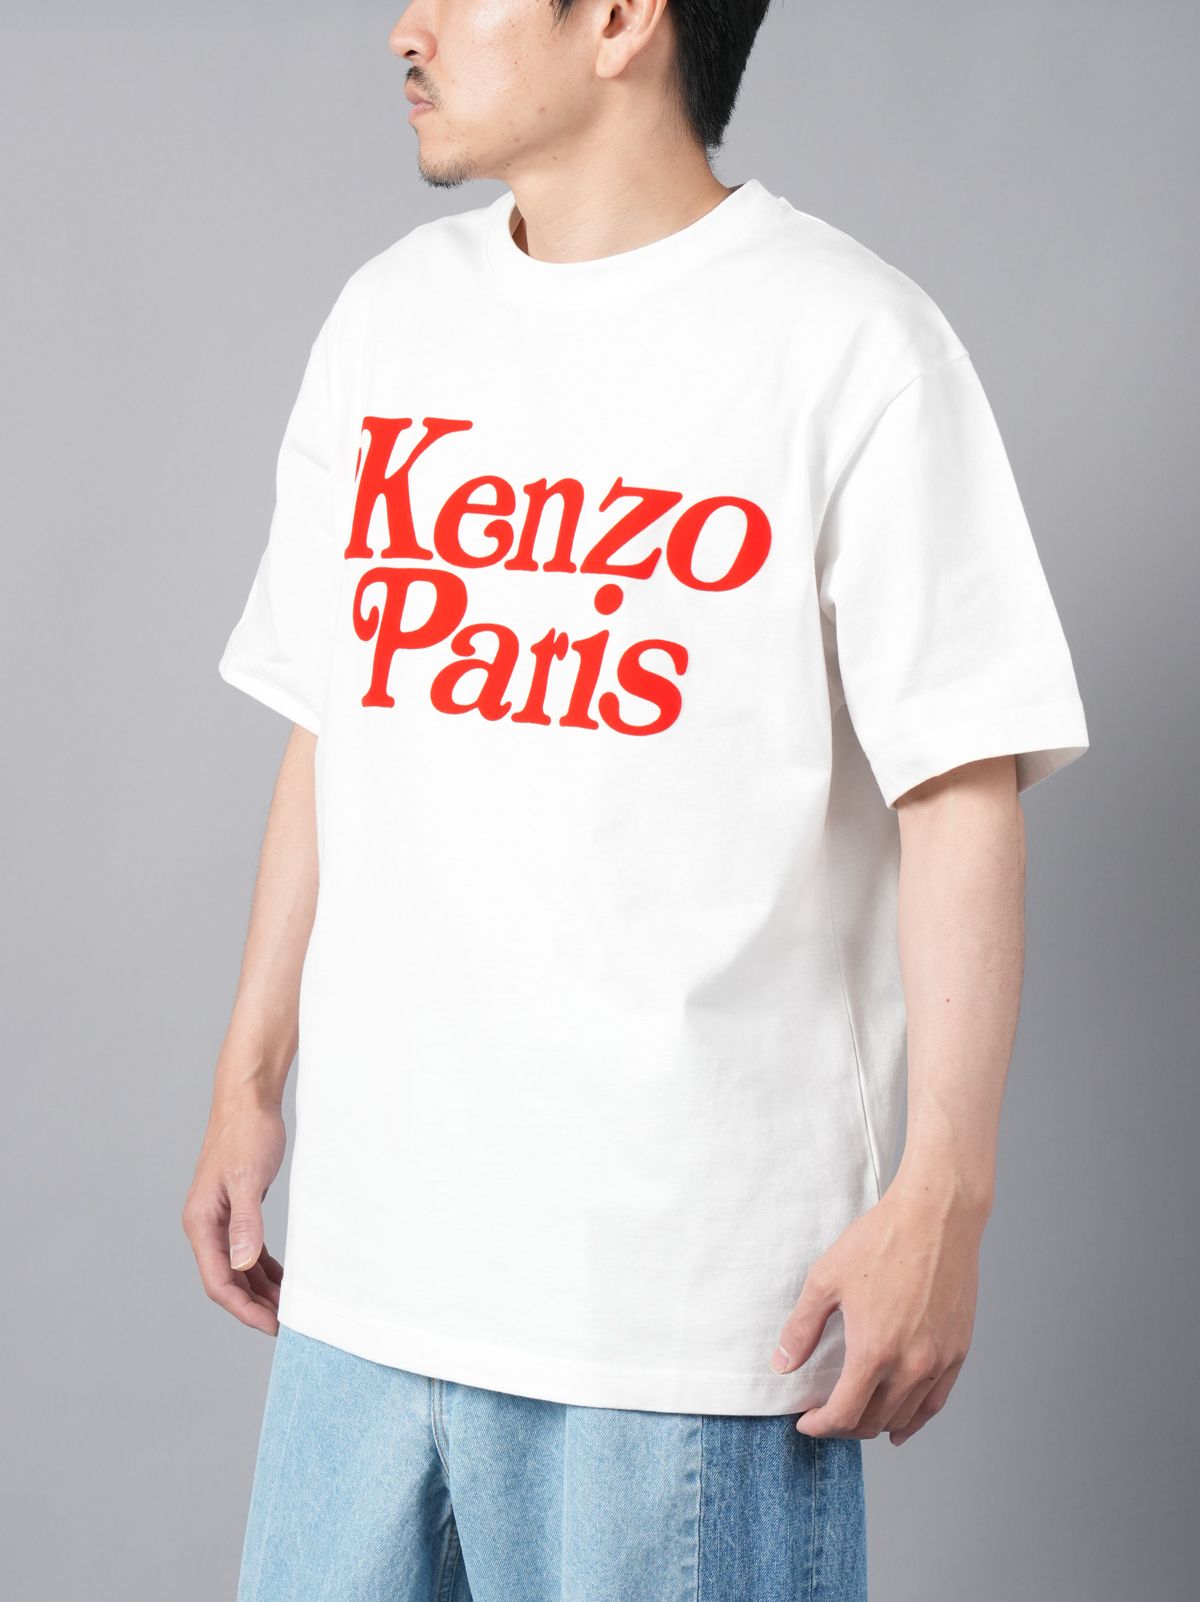 KENZO - 【残りわずか】【限定】 KENZO x VERDY / KENZO BY VERDY